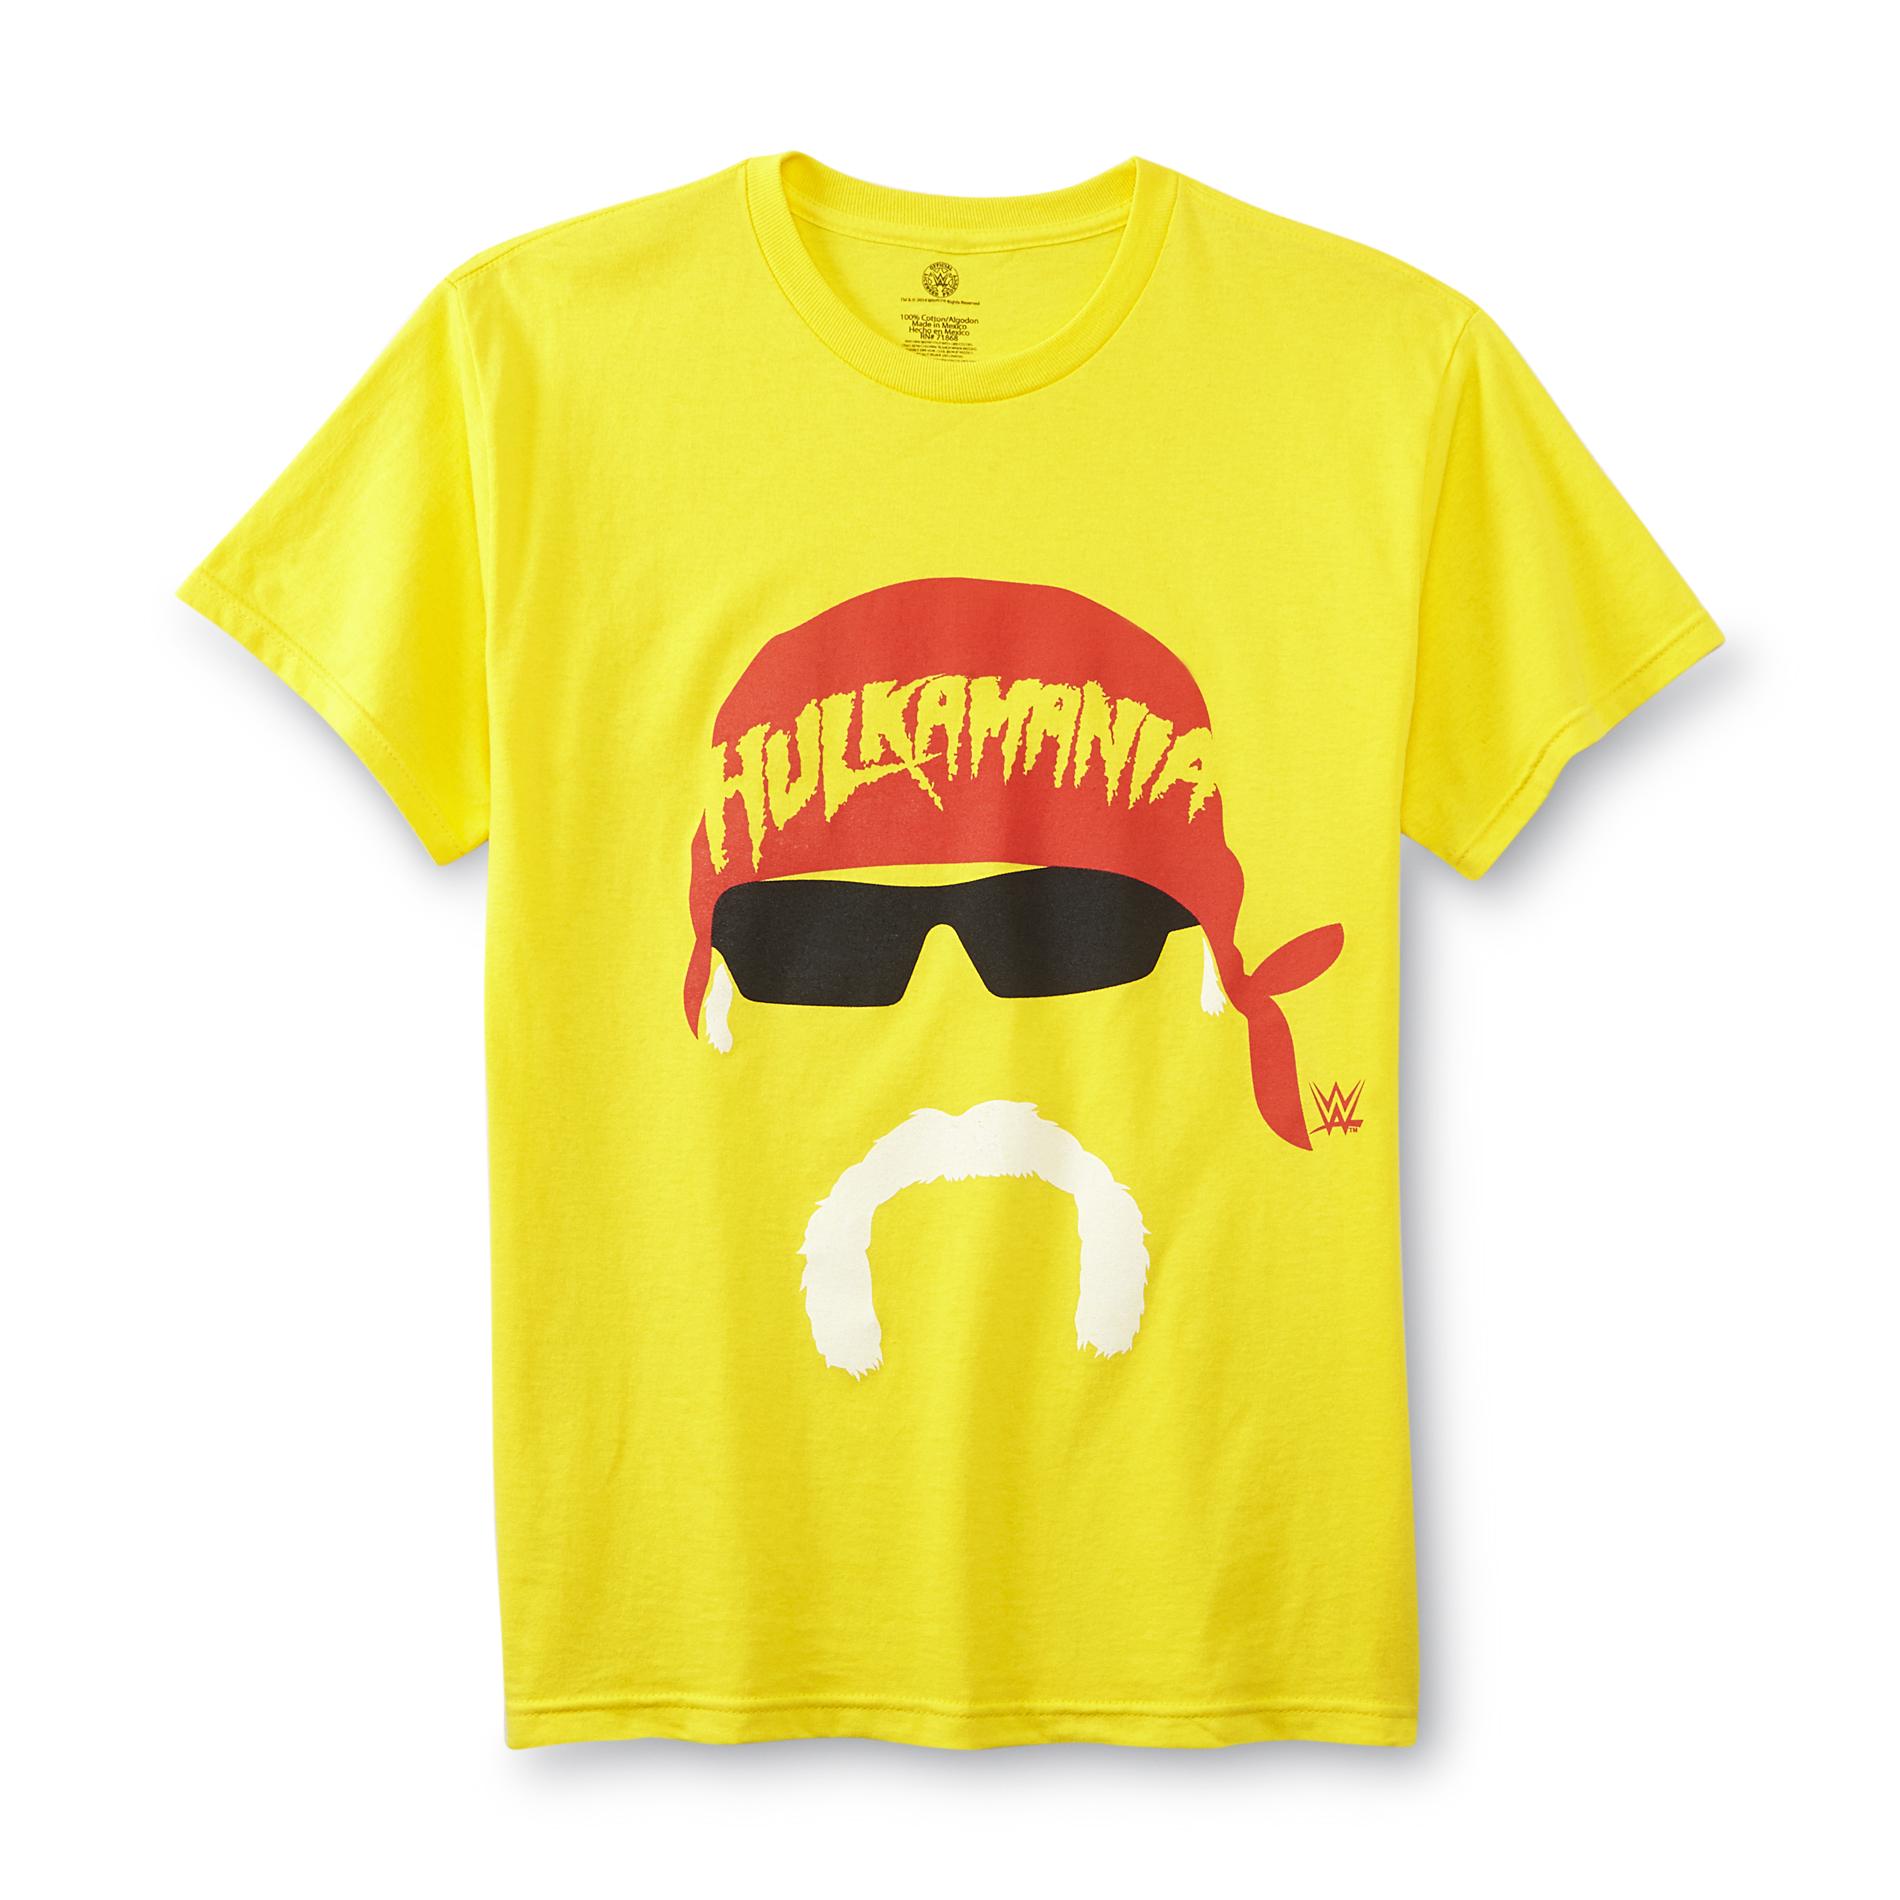 WWE Men's Graphic T-Shirt - Hulk Hogan